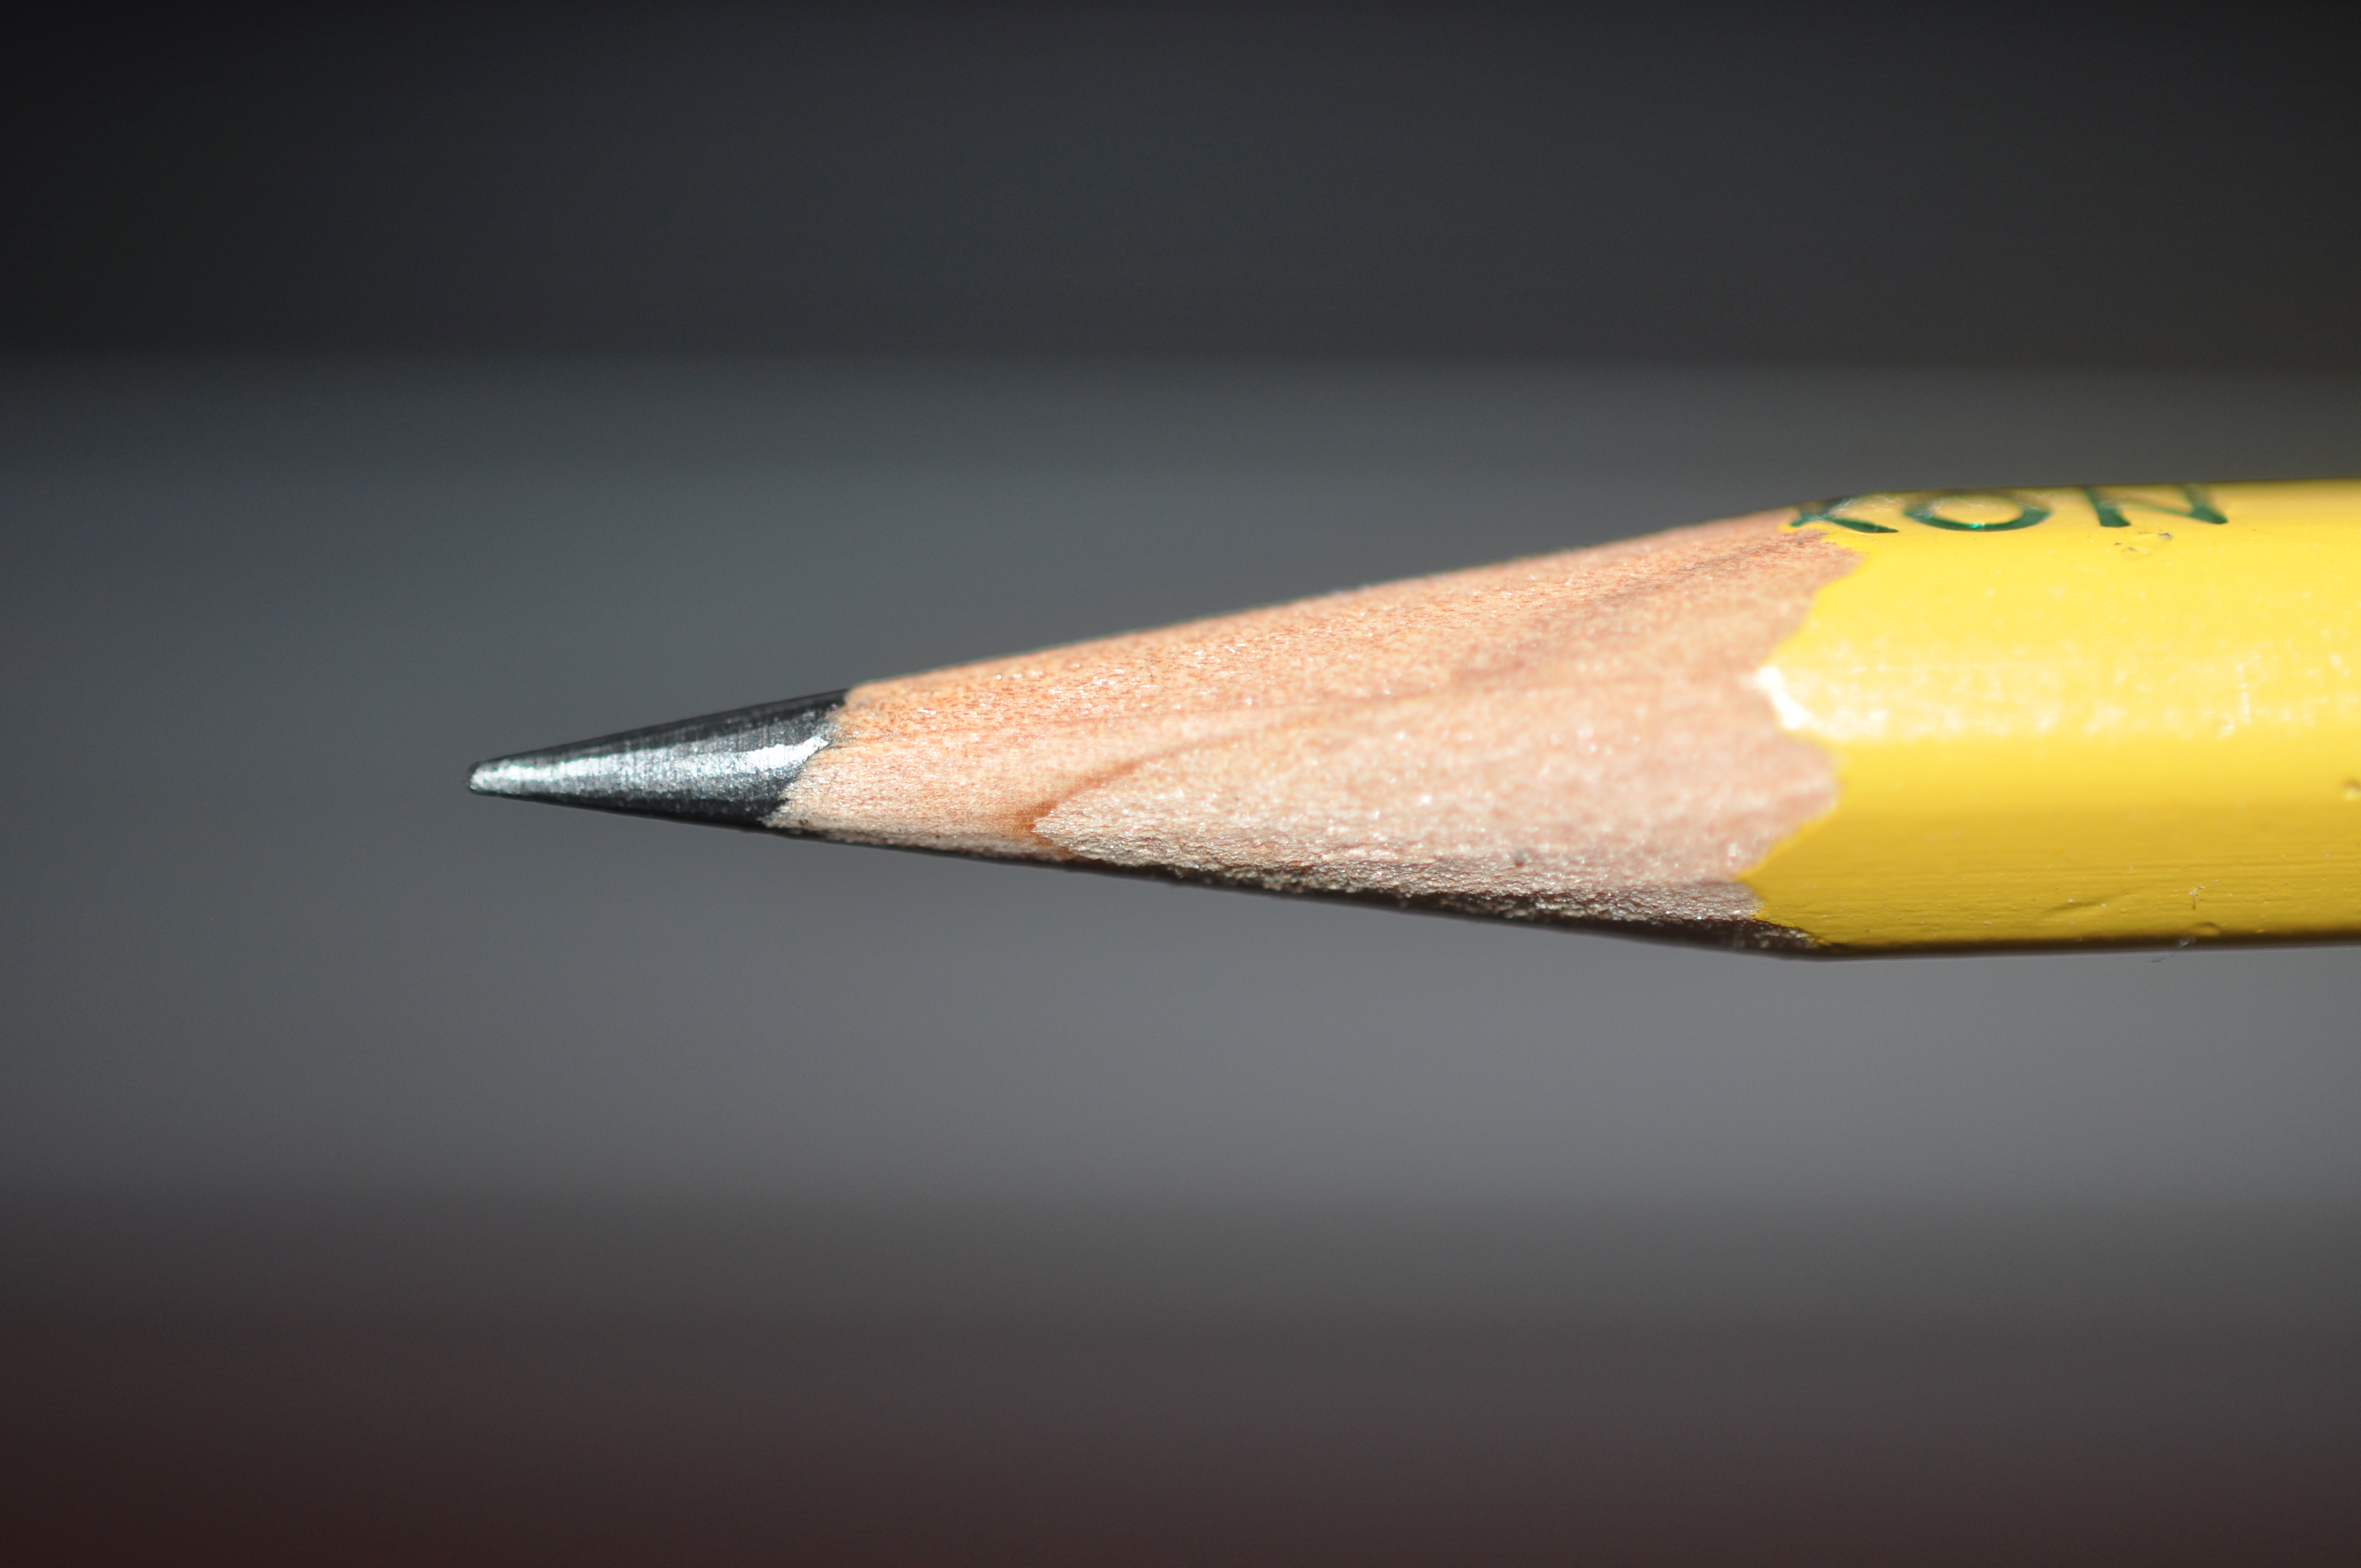 File:Pencil tip closeup 2.JPG - Wikimedia Commons